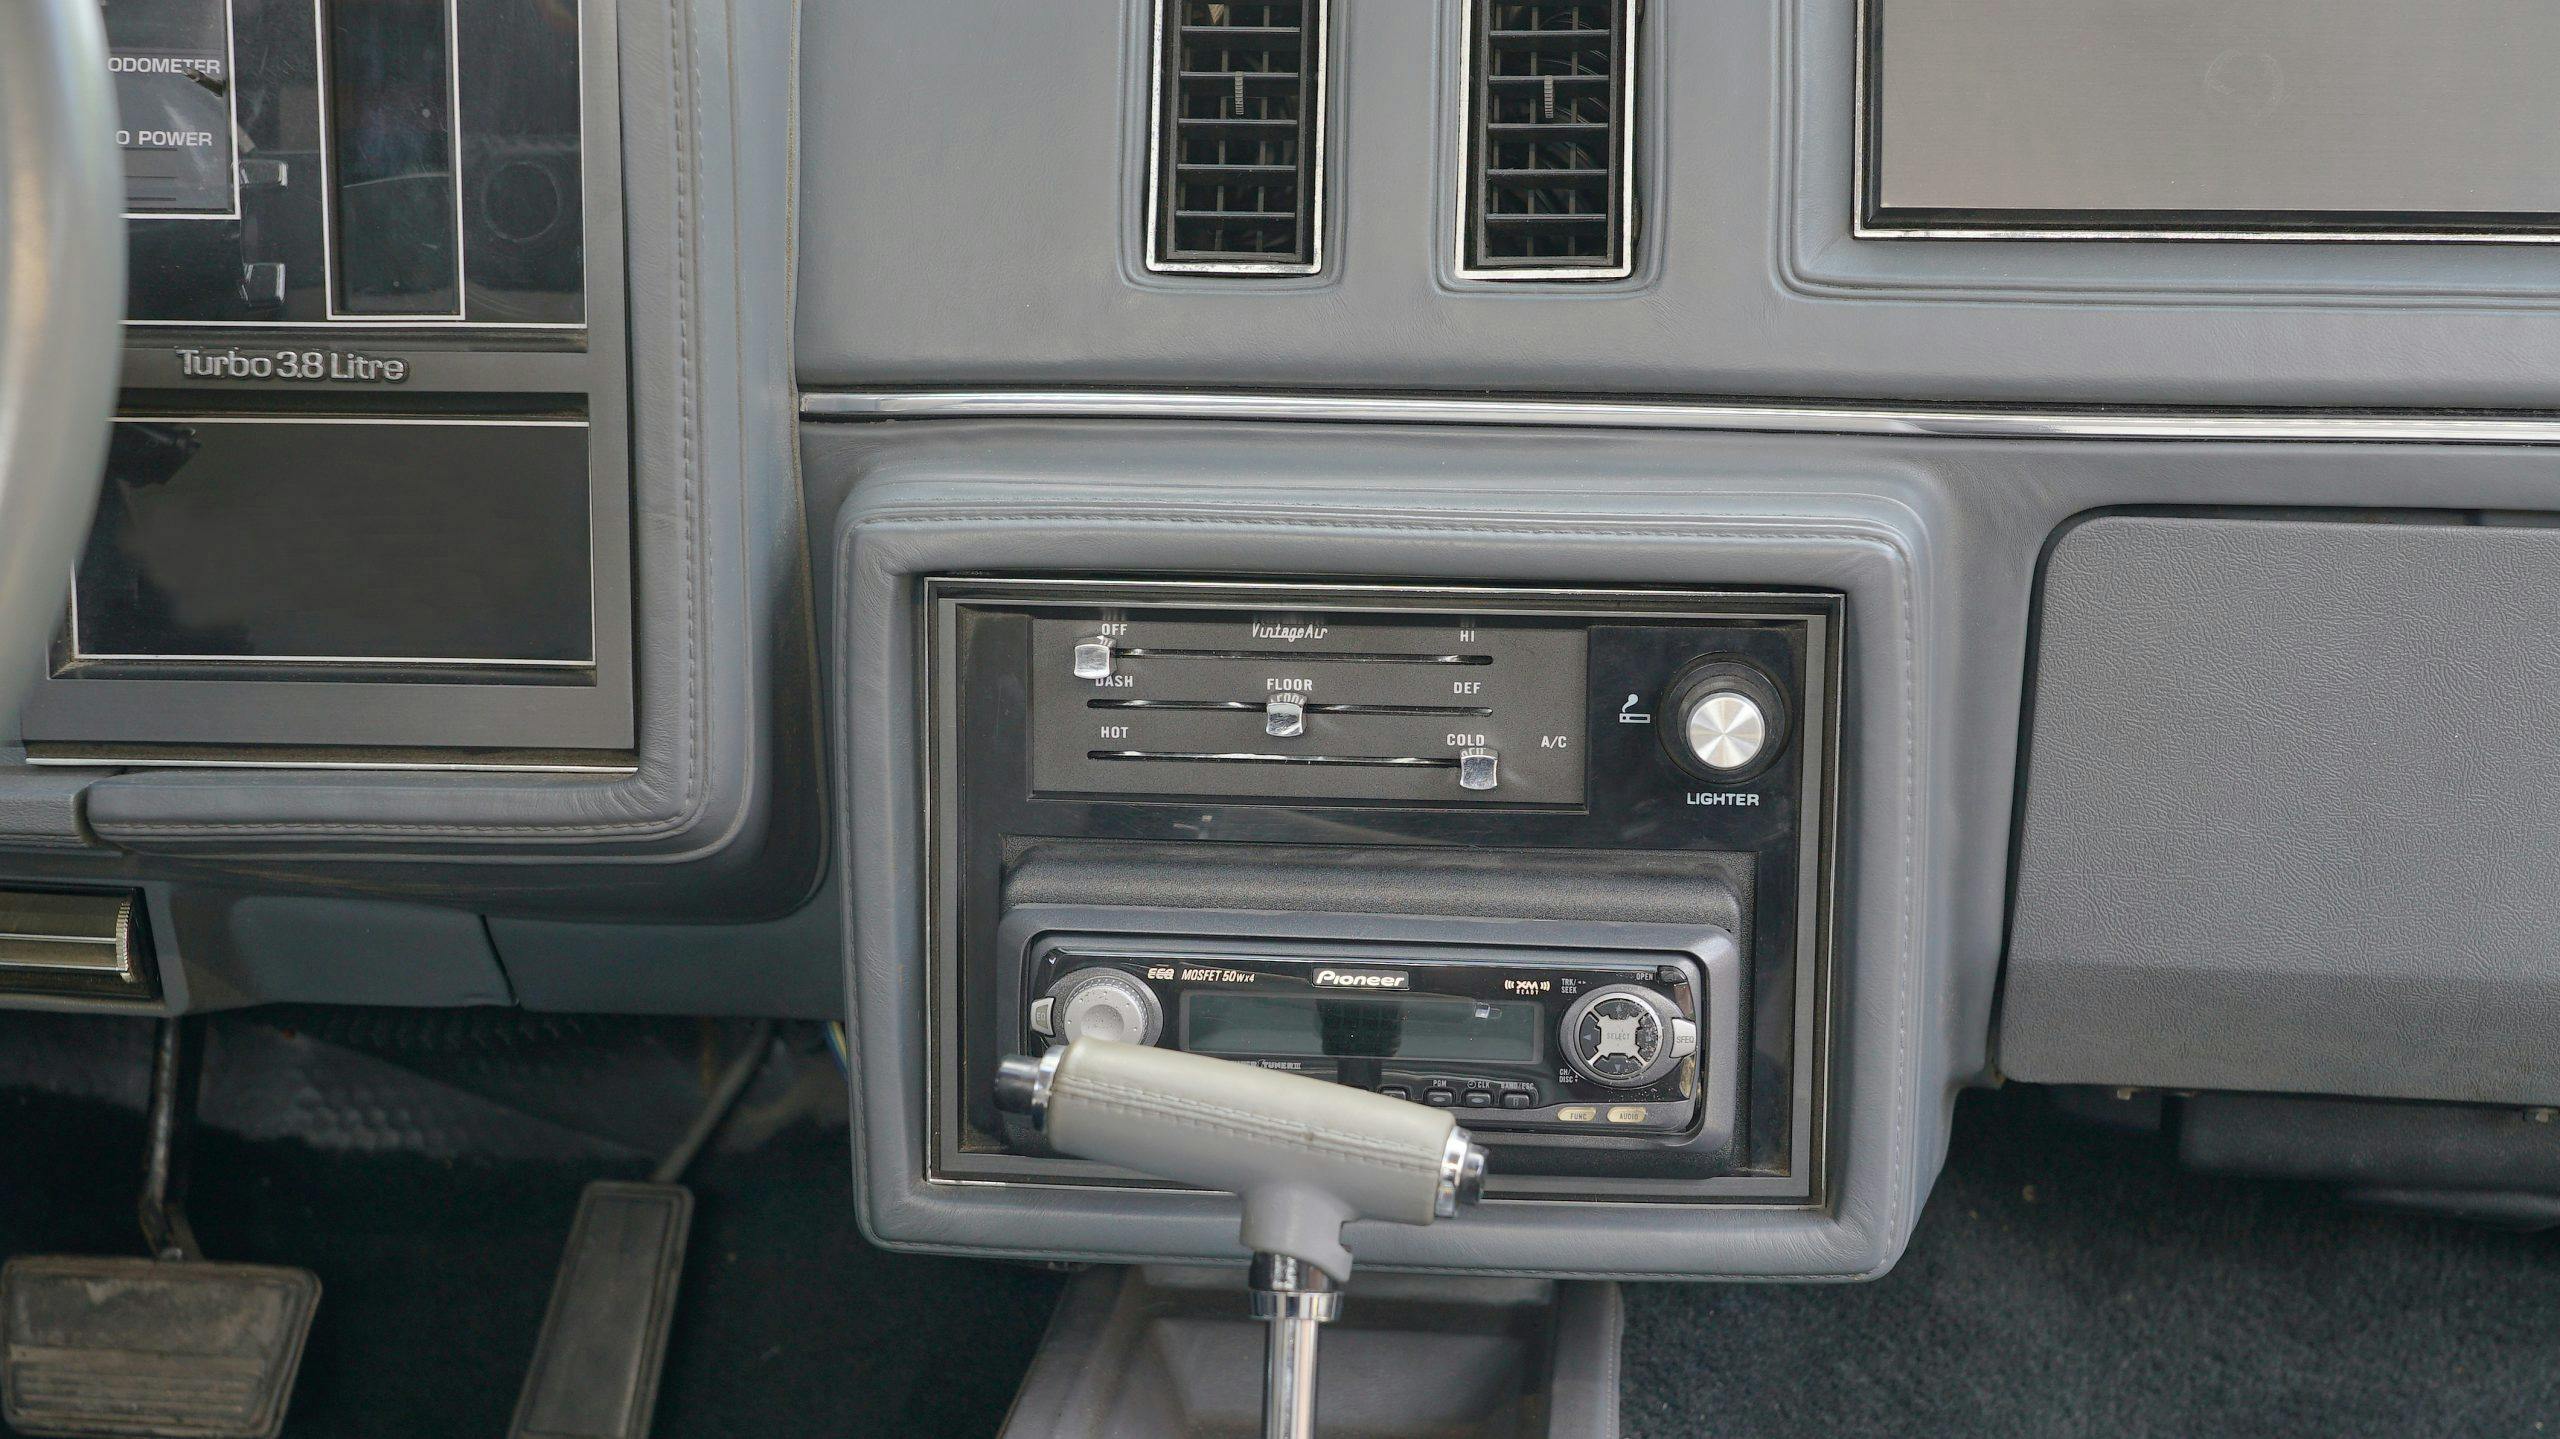 Olds Cutlass Buick radio